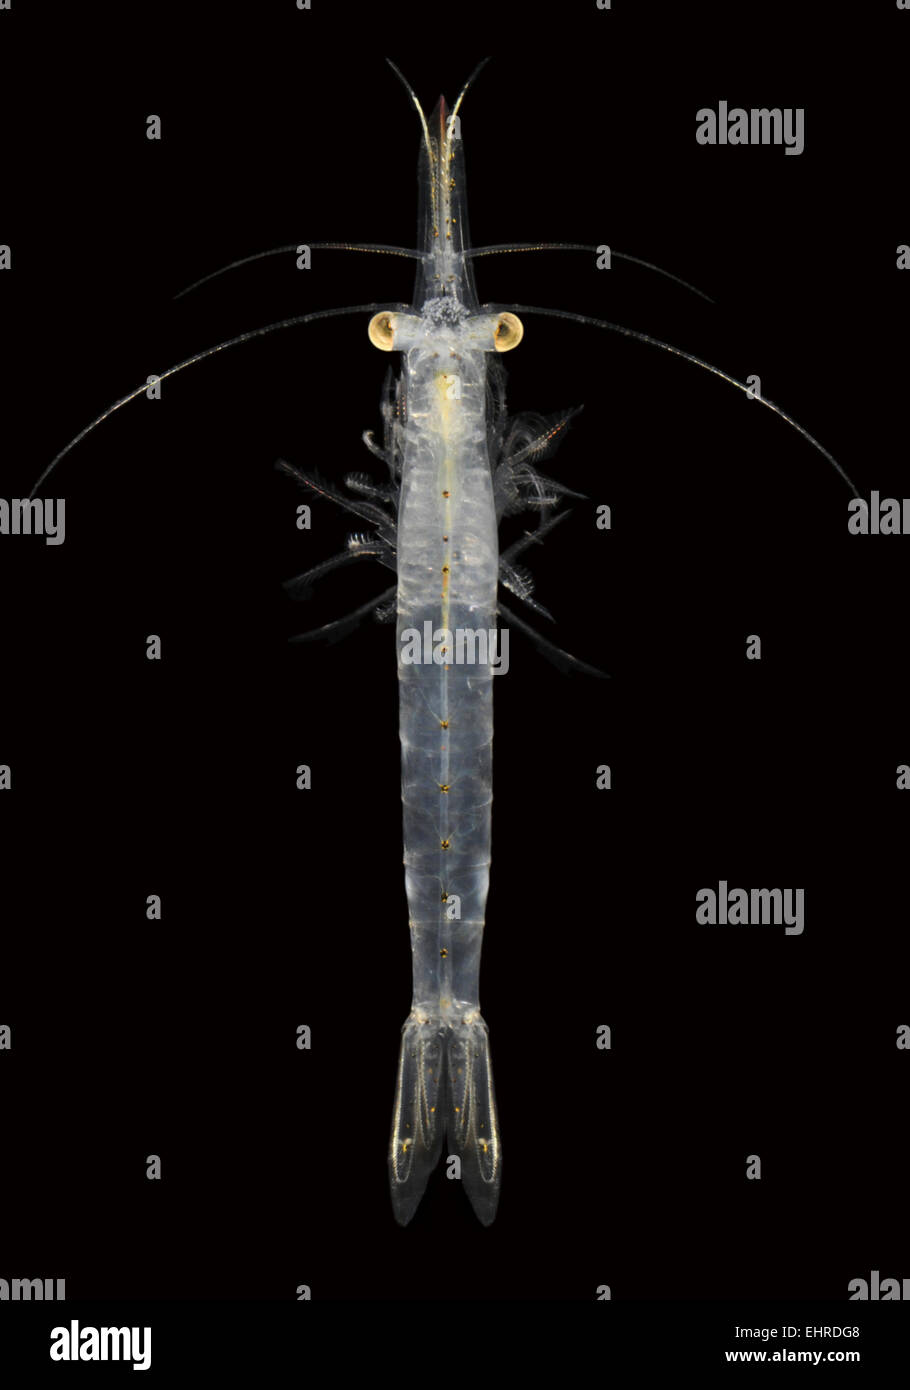 Chameleon Shrimp - Praunus flexuosus Stock Photo